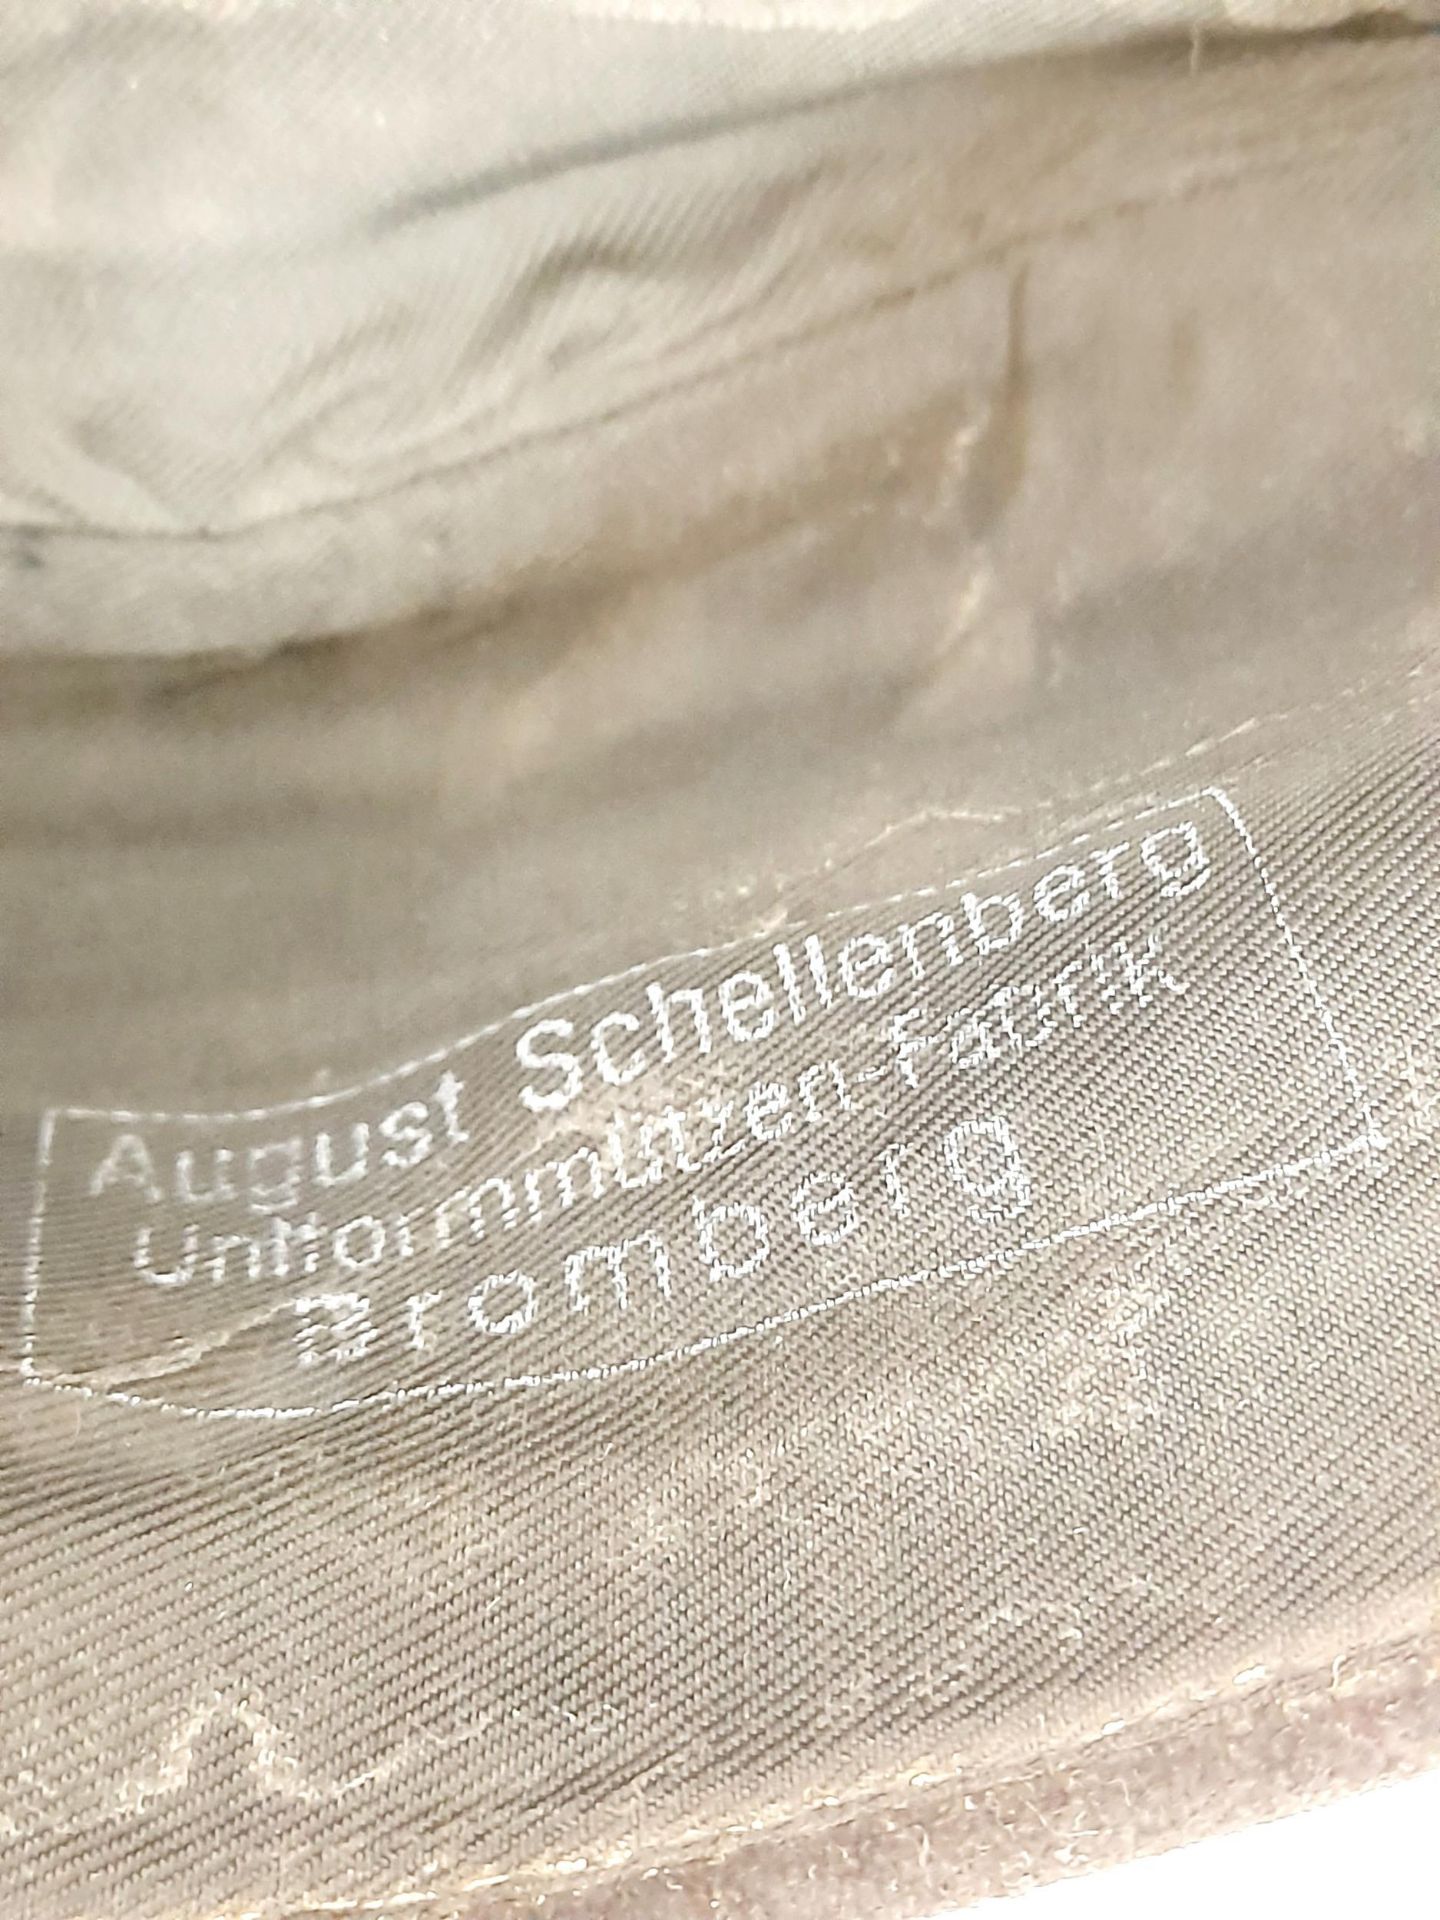 WW2 German Panzer Crew (pink soutache) Overseas Side Cap. Makers stamped “August Schellenberg” - Bild 7 aus 7